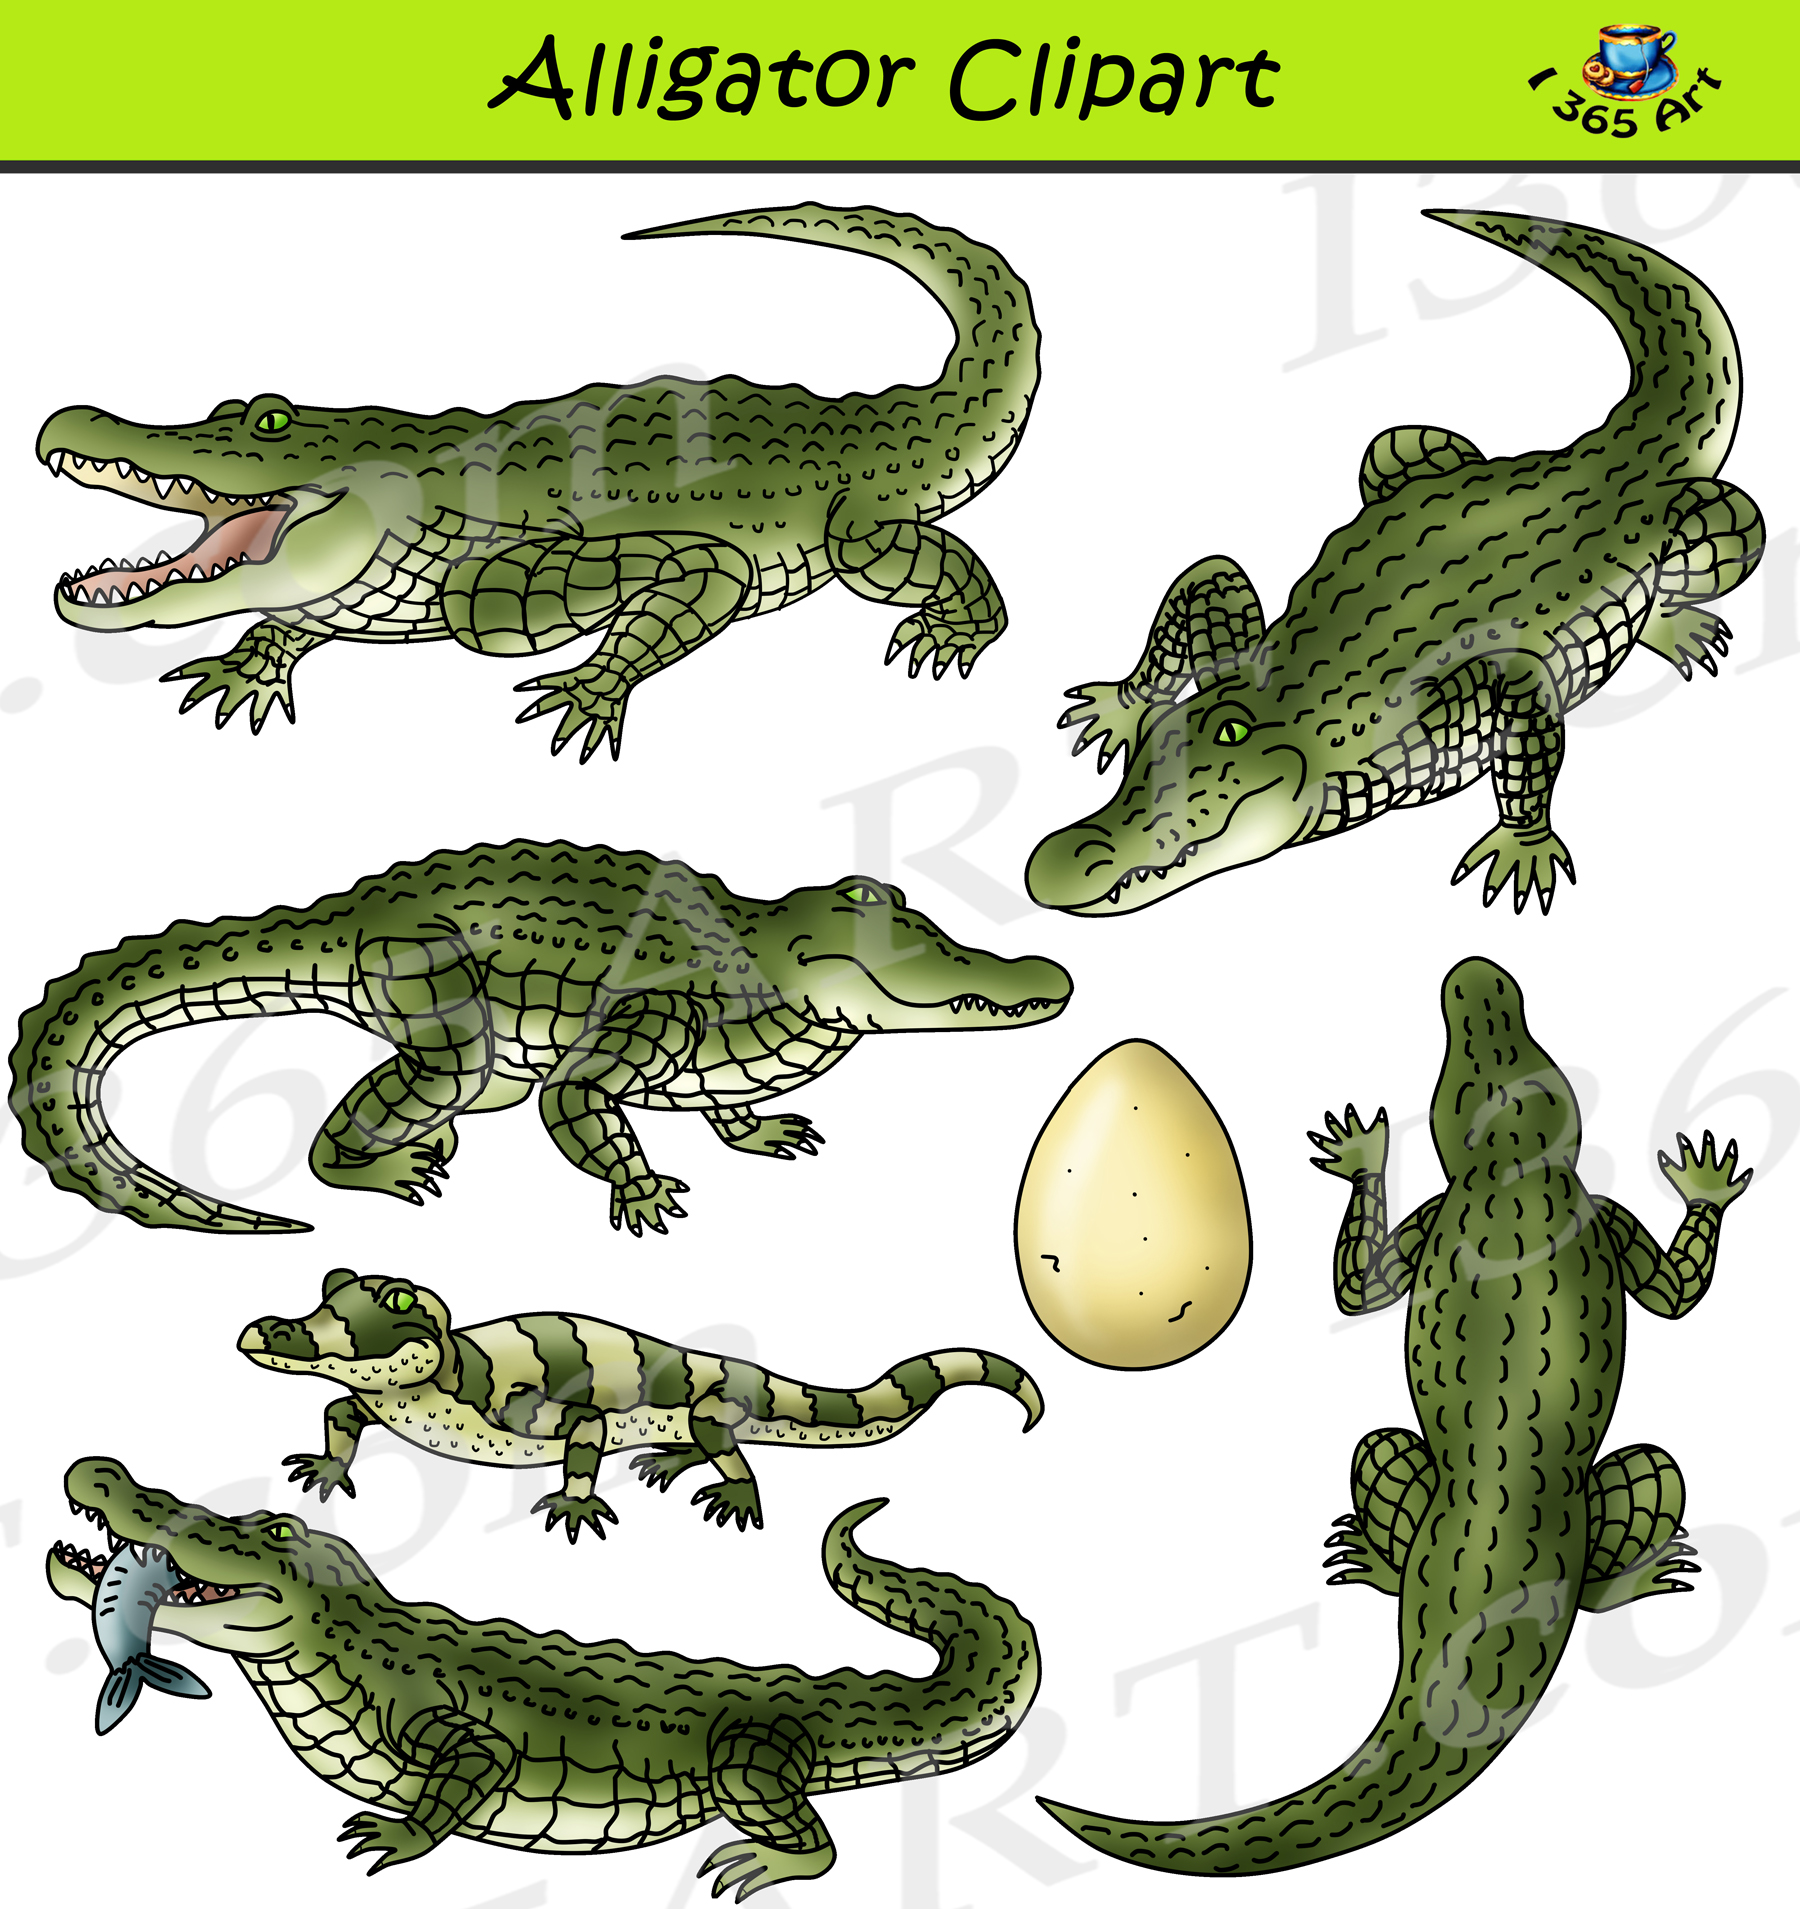 Alligator clipart set.